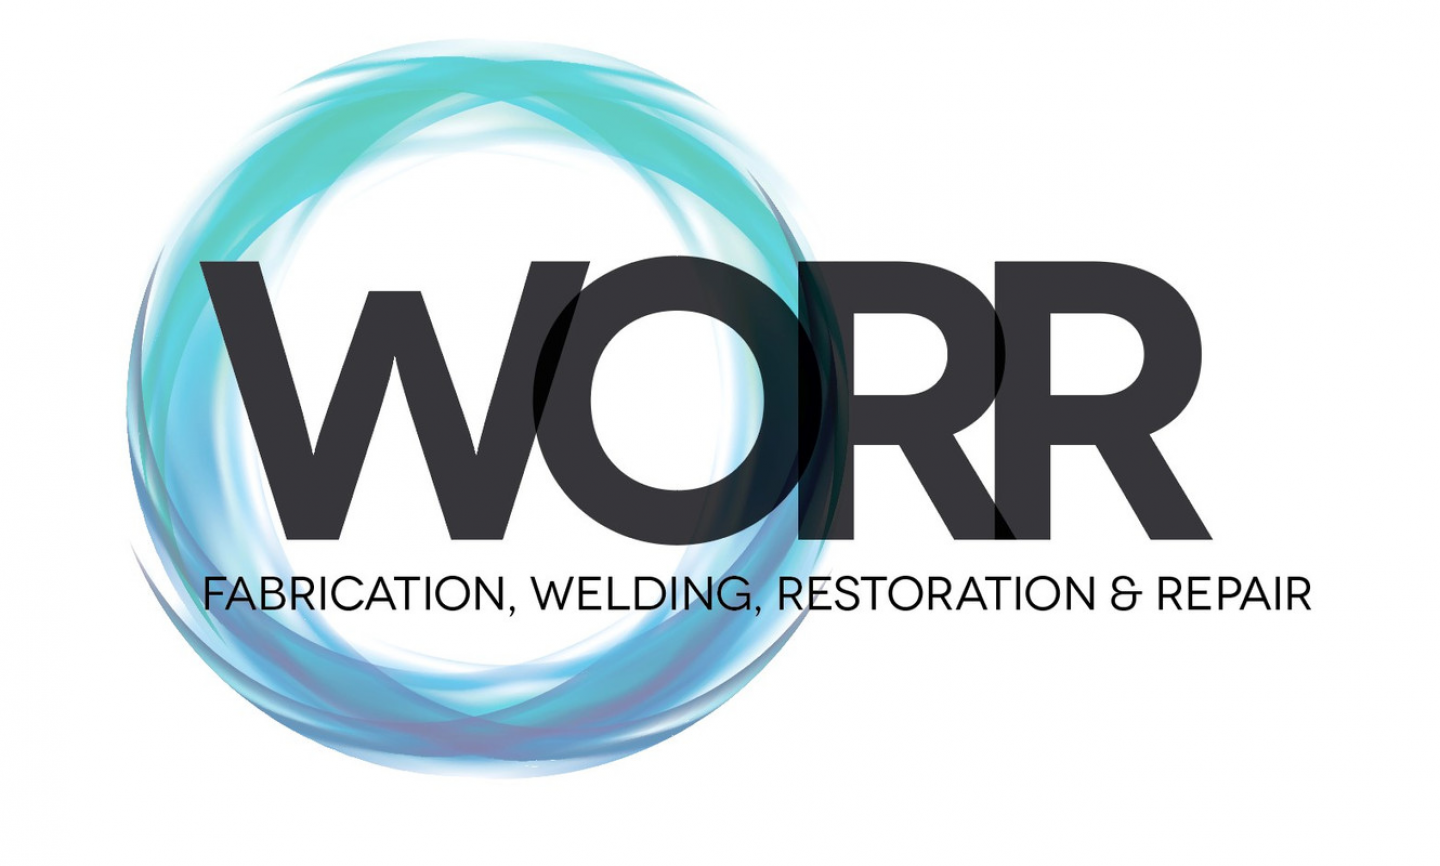 WORR Logo